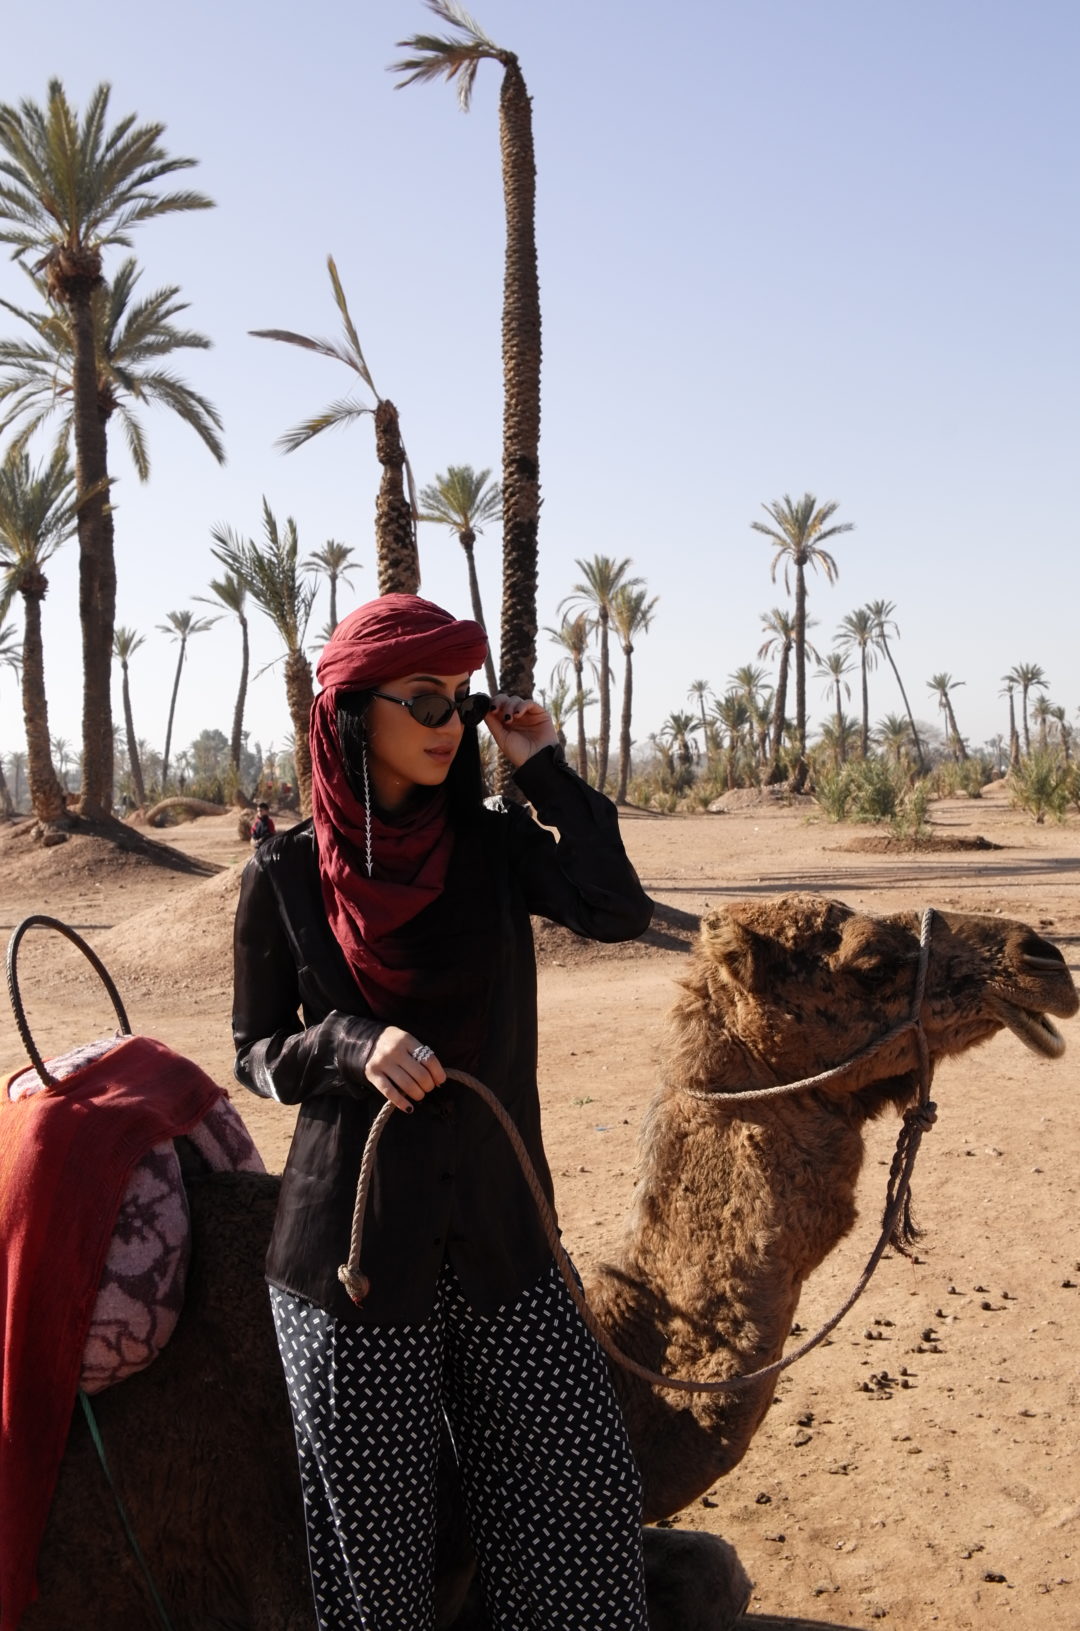 LA Blogger Tania Sarin in Marrakech Morocco travel scene with camel